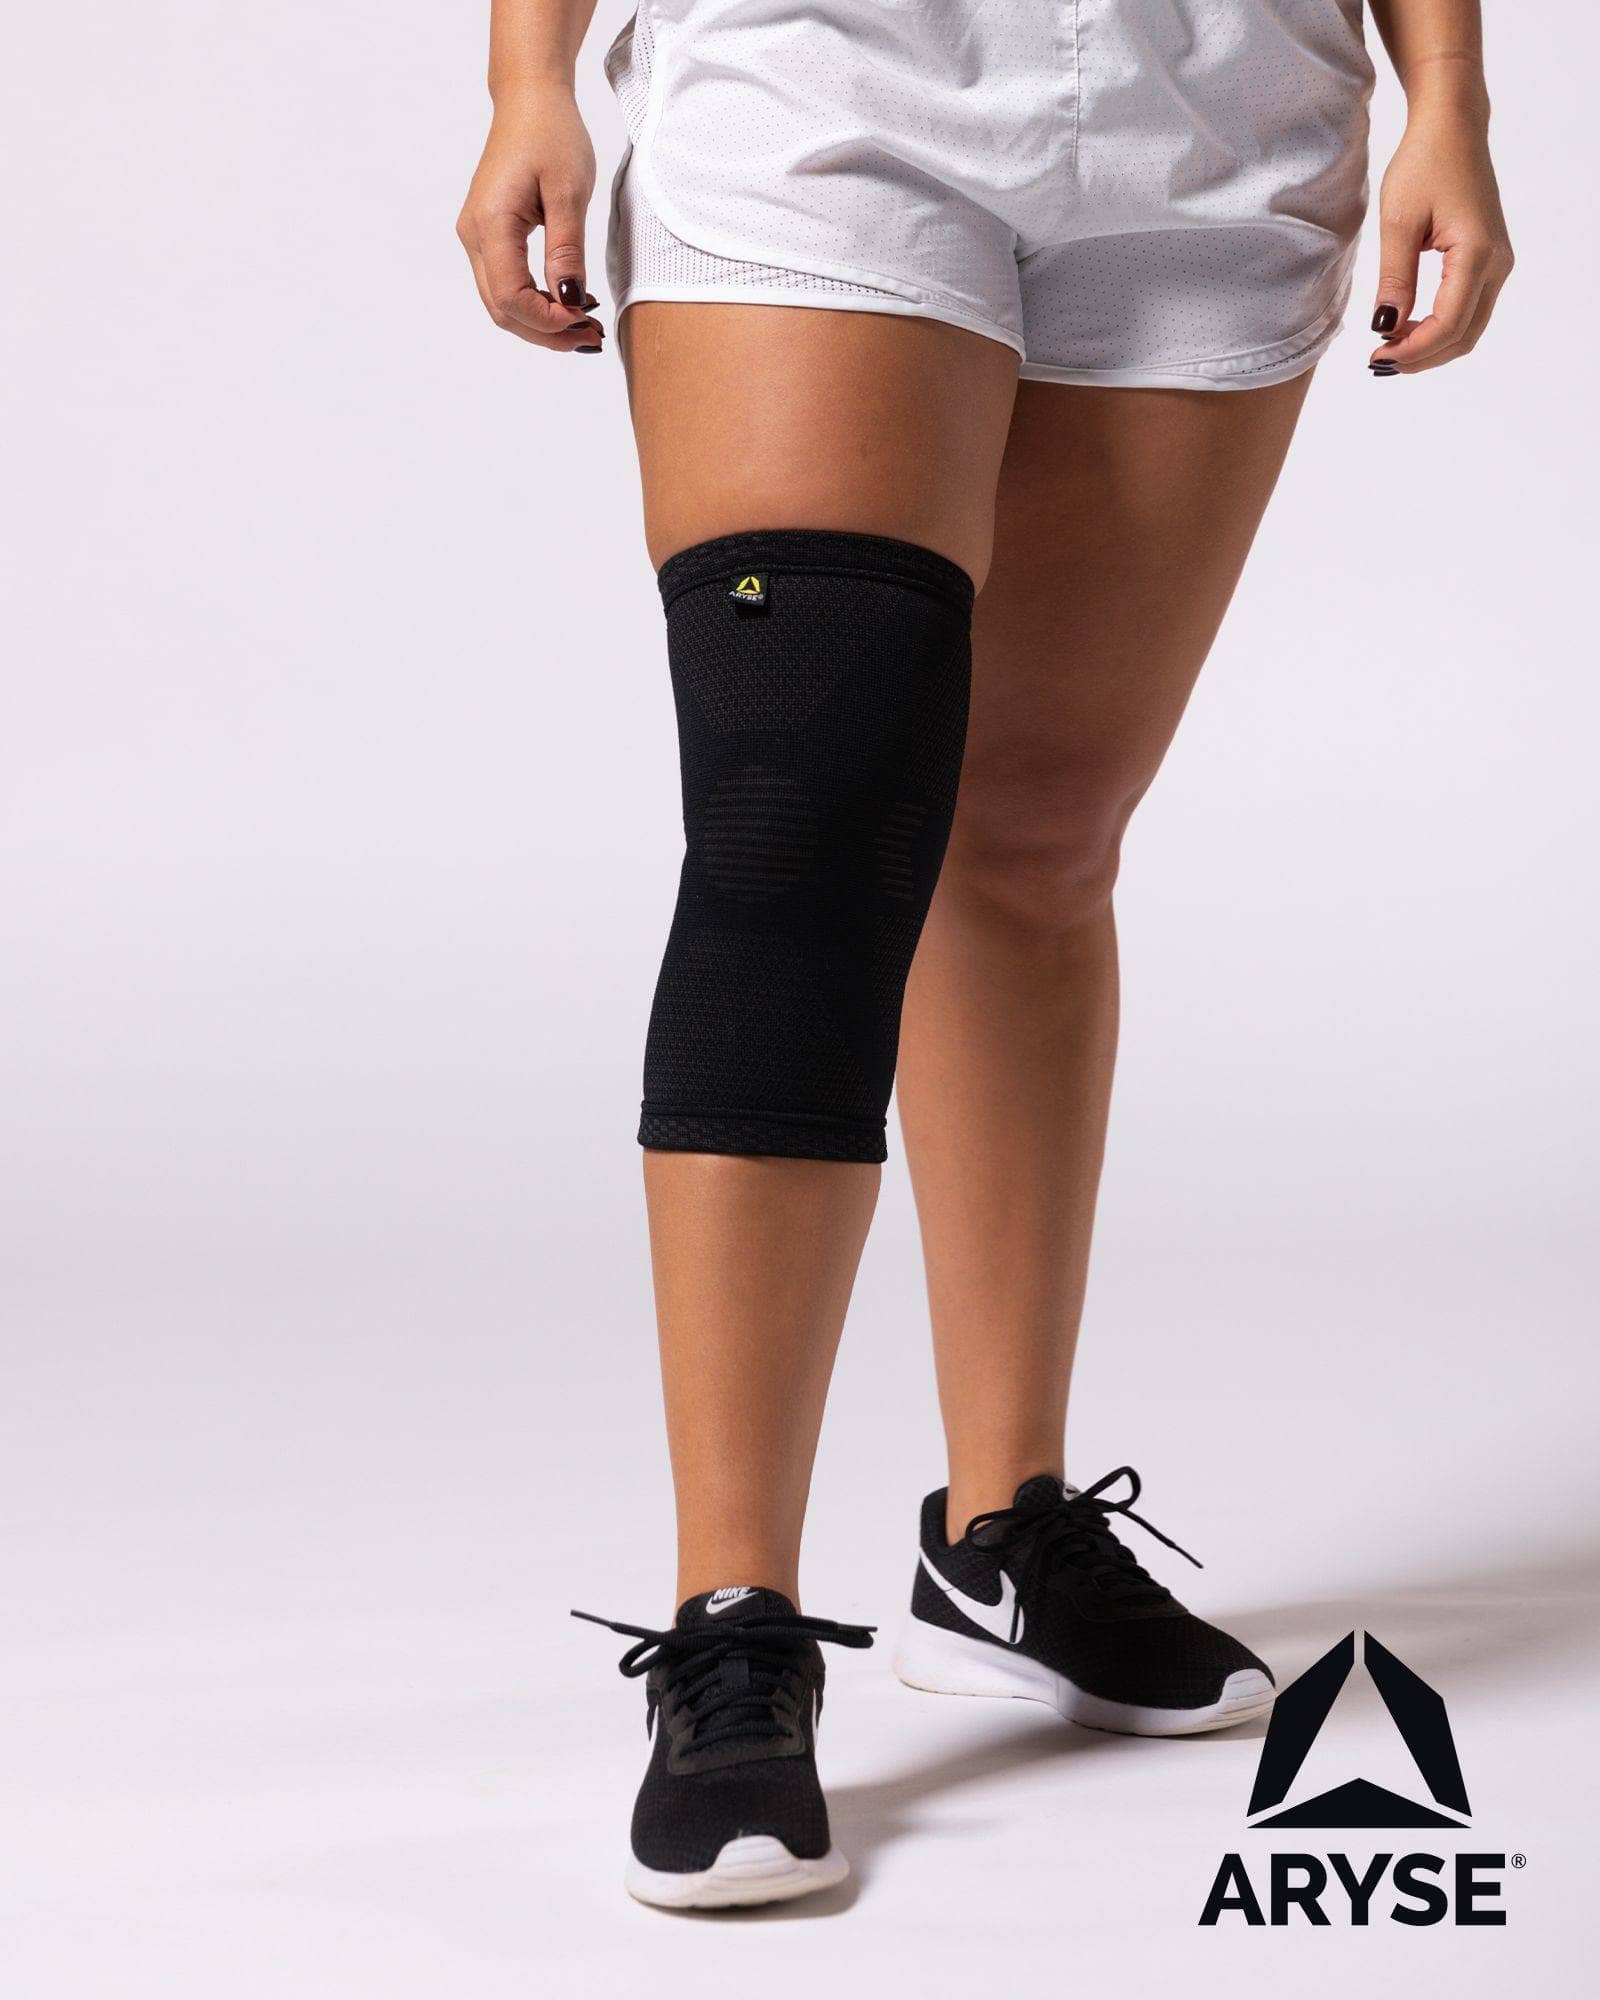 ROM Knee Brace ARYSE® TRU-RANGE® - DAPHCO - Medical Equipment